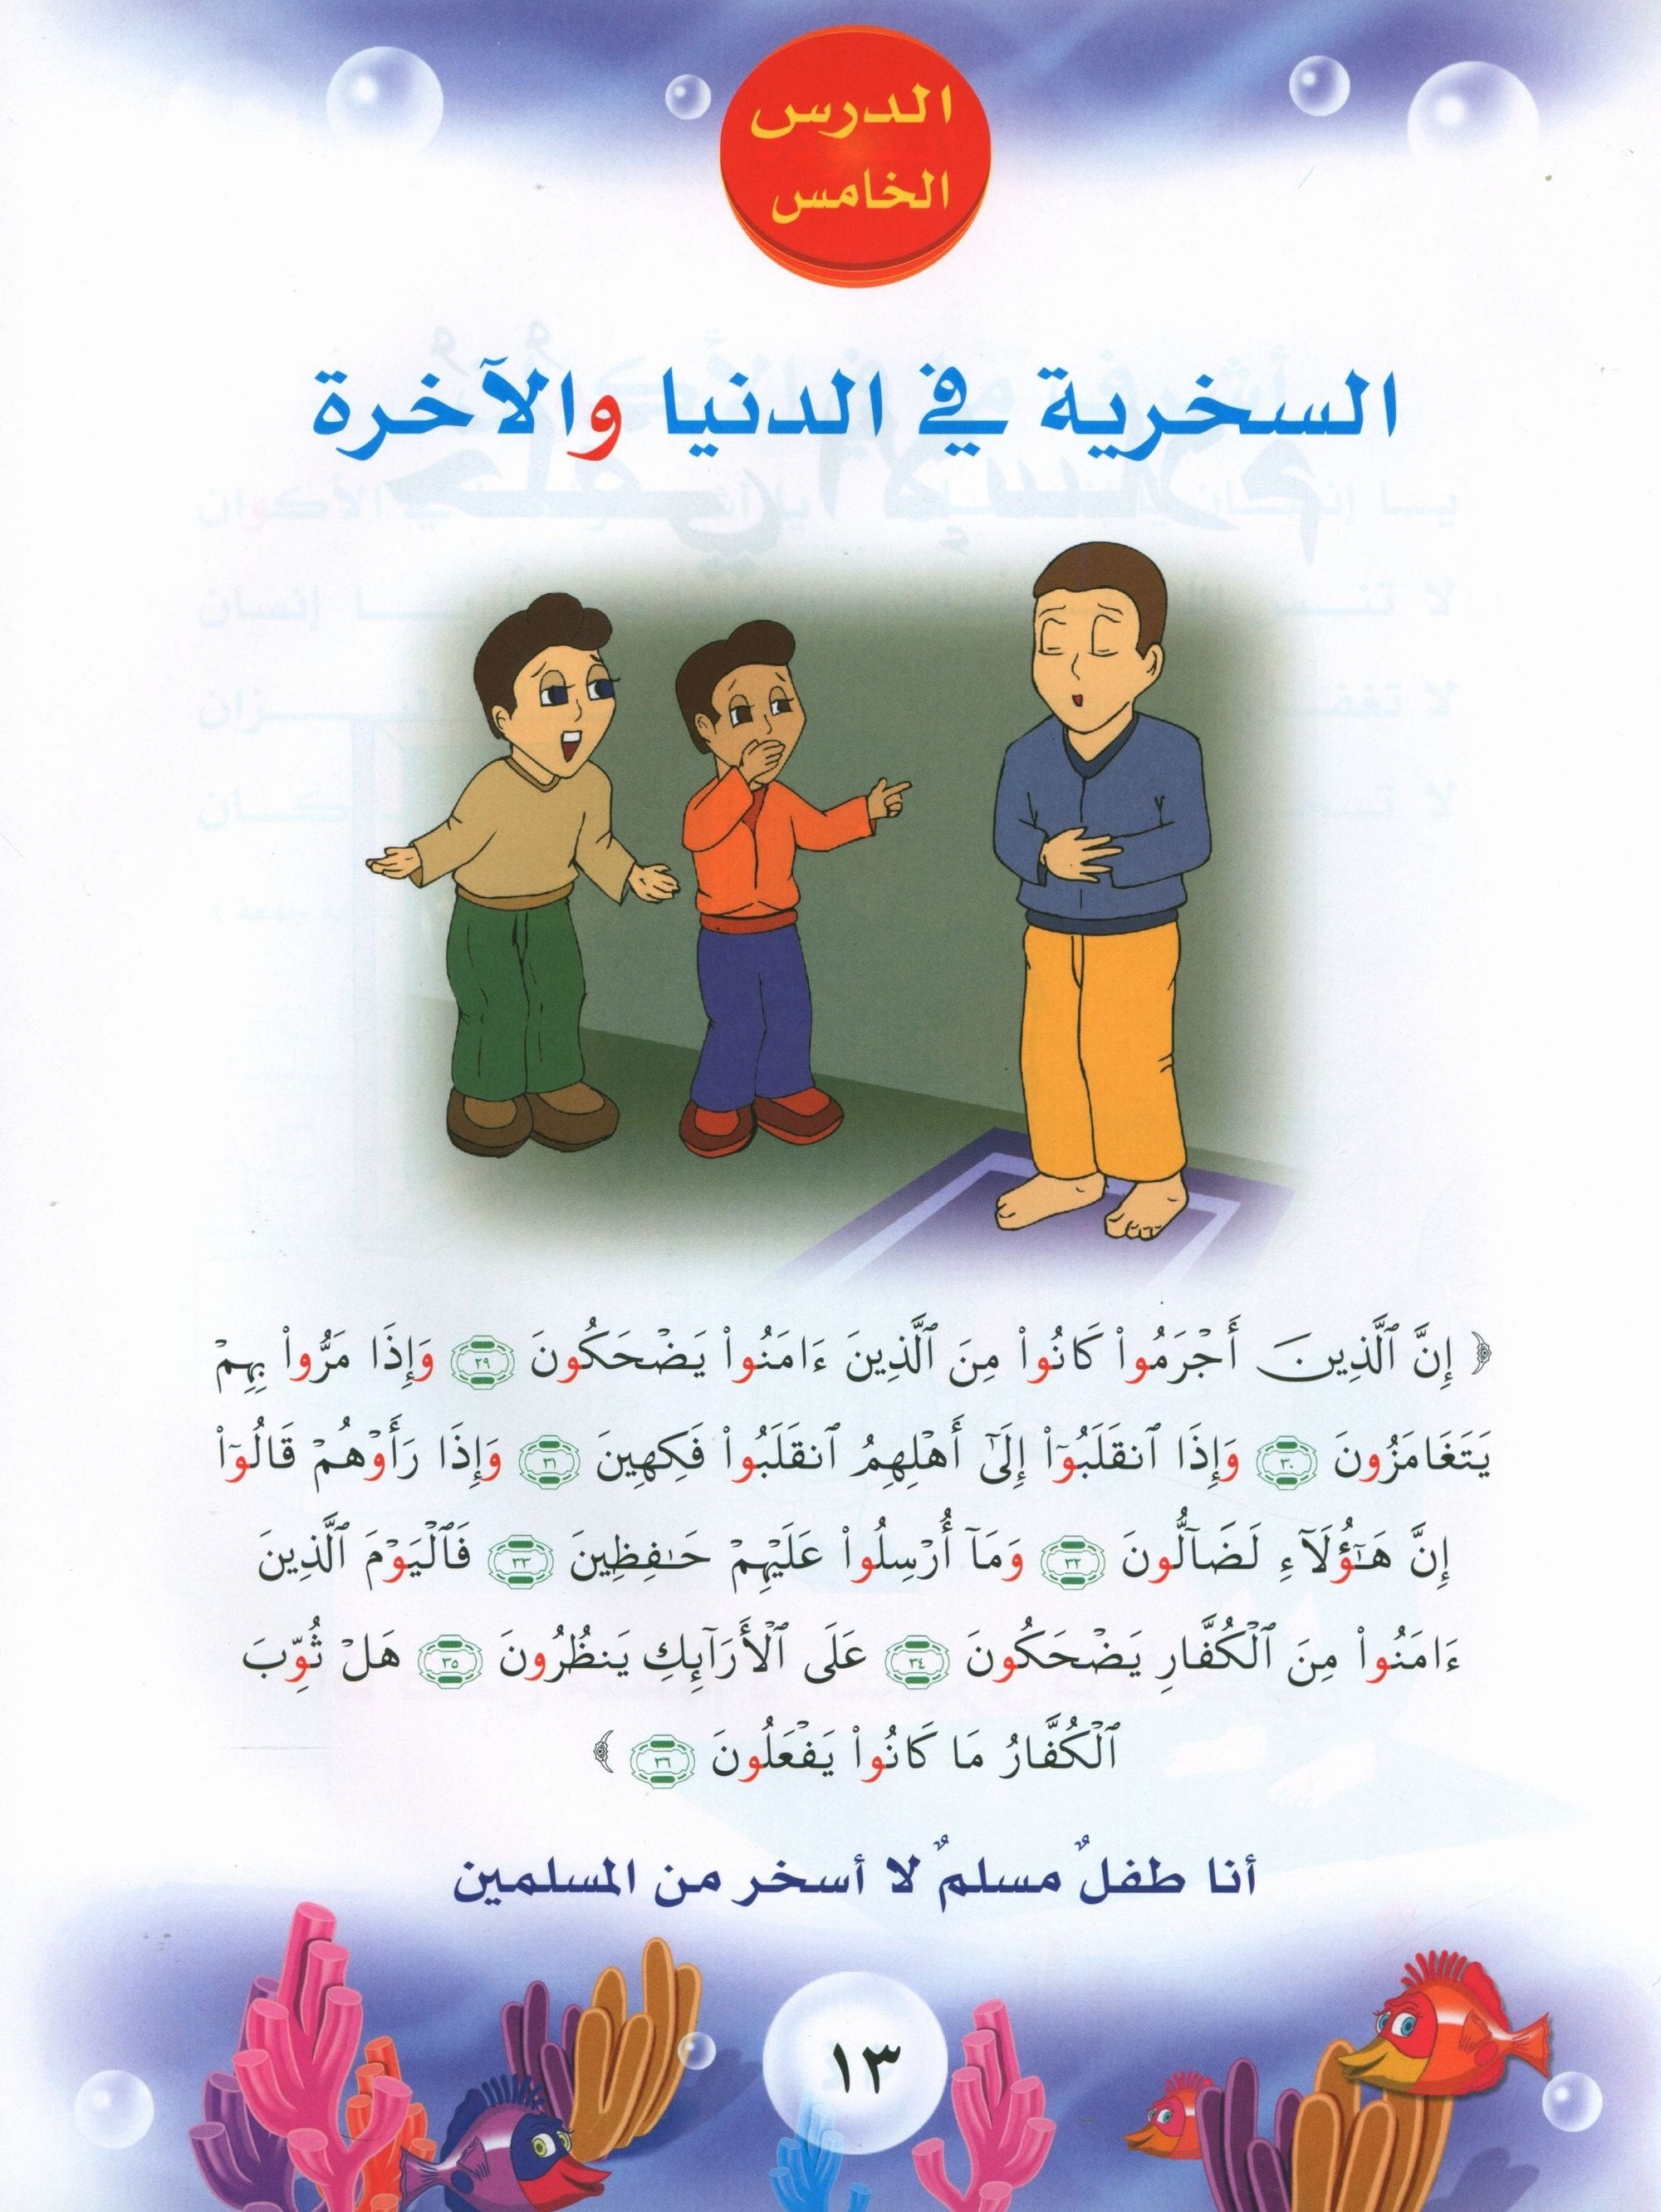 Quranic Kids Club - The Quran Beloved Level 2 Part 2 نادي الطفل القرآني - أحباب القران